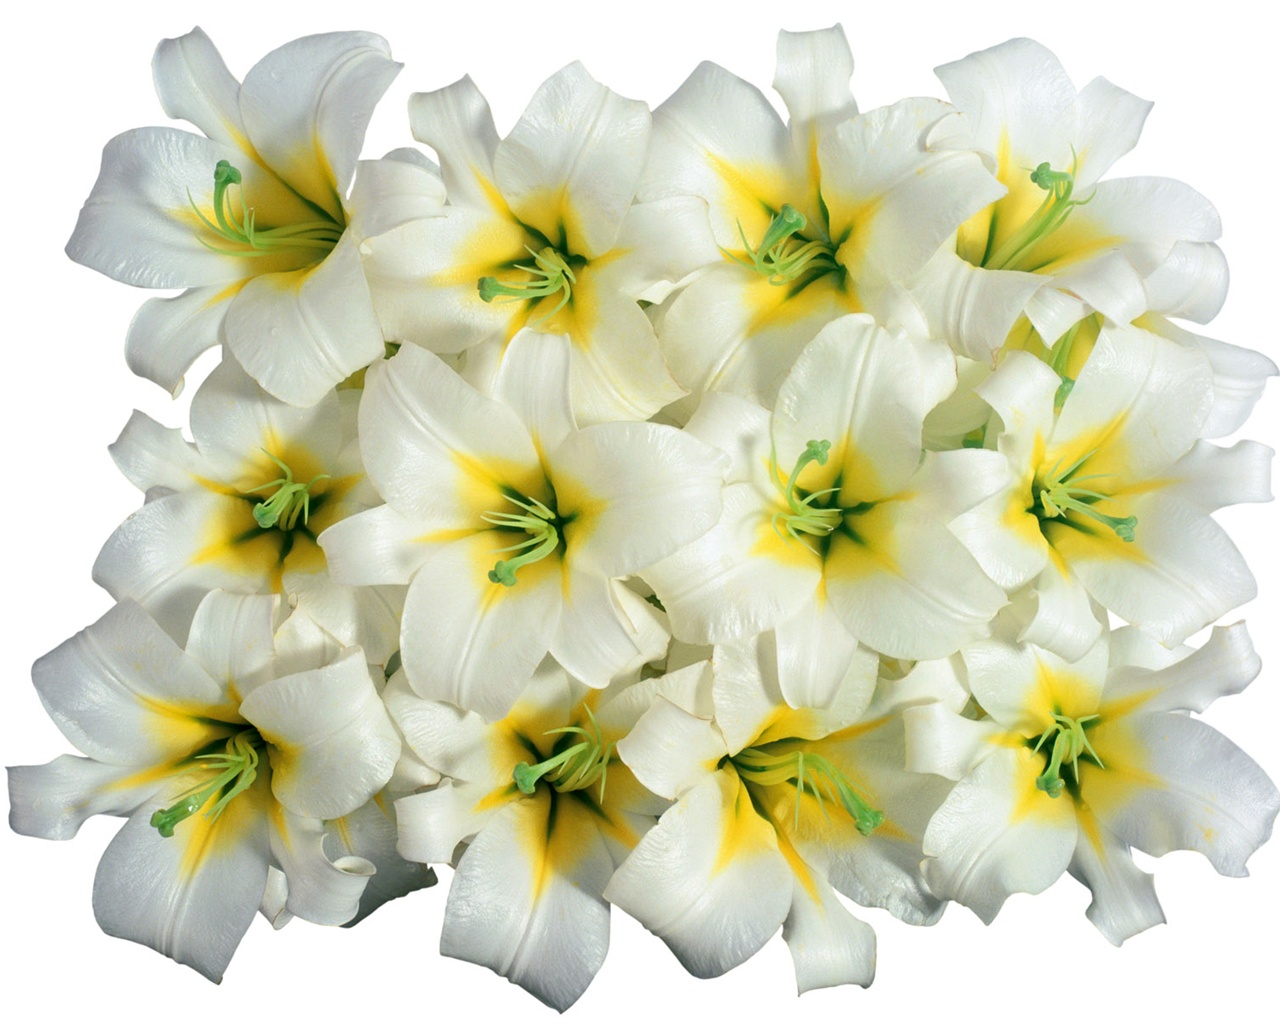 Snow-white flowers wallpaper #3 - 1280x1024